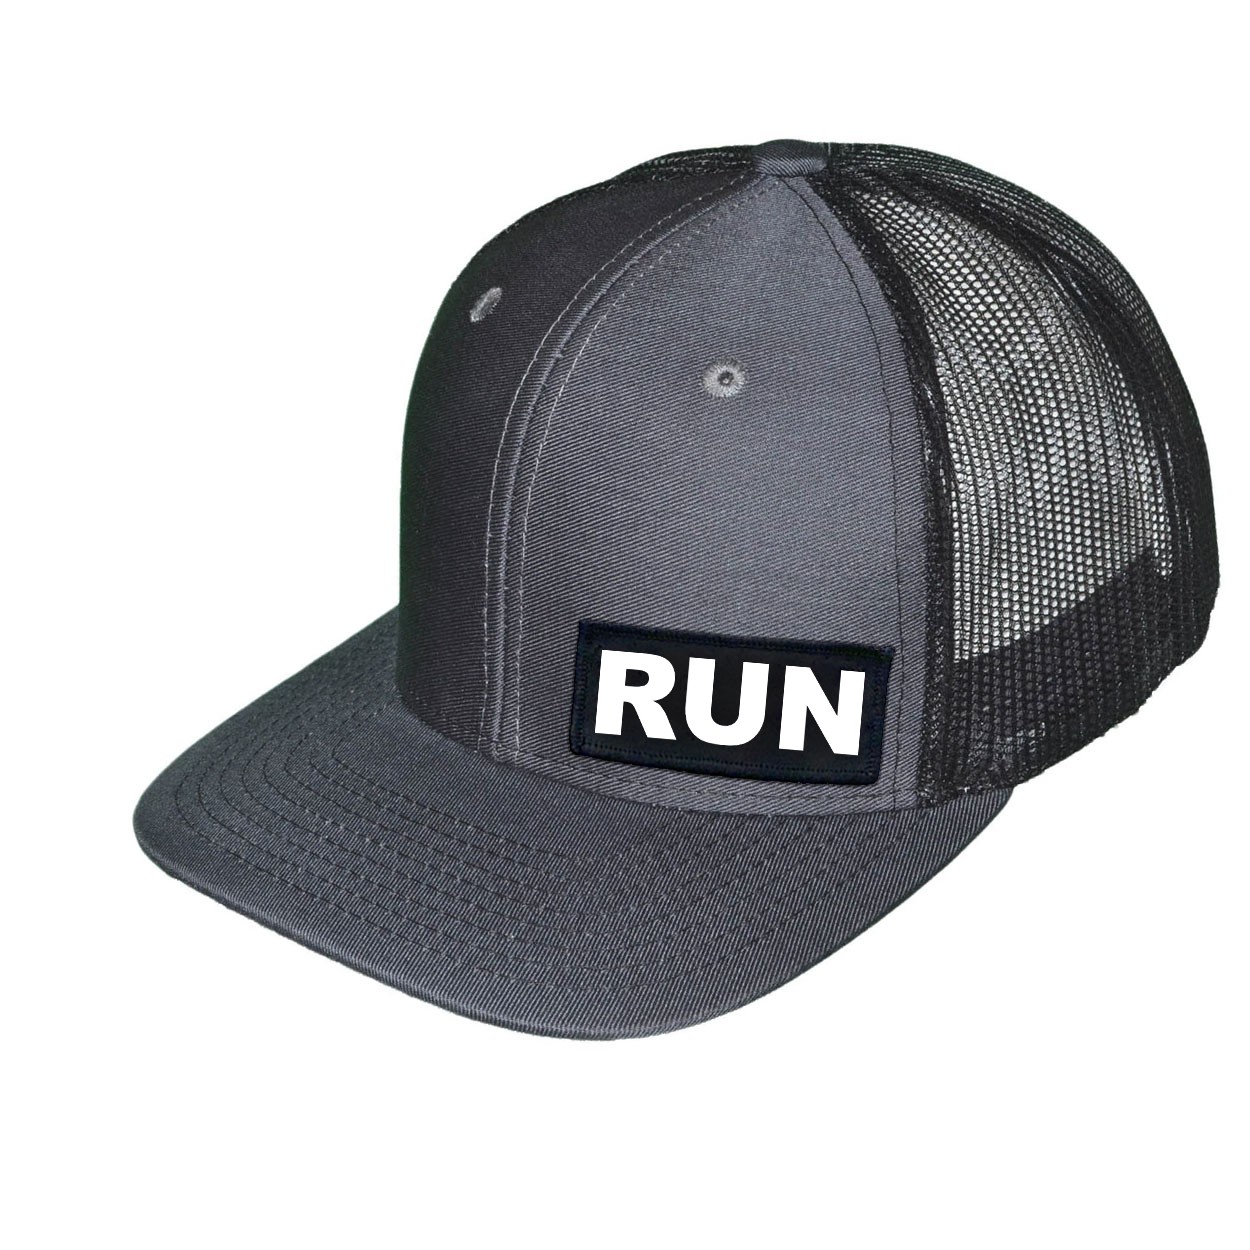 Run Brand Logo Night Out Woven Patch Snapback Trucker Hat Dark Gray/Black (White Logo)